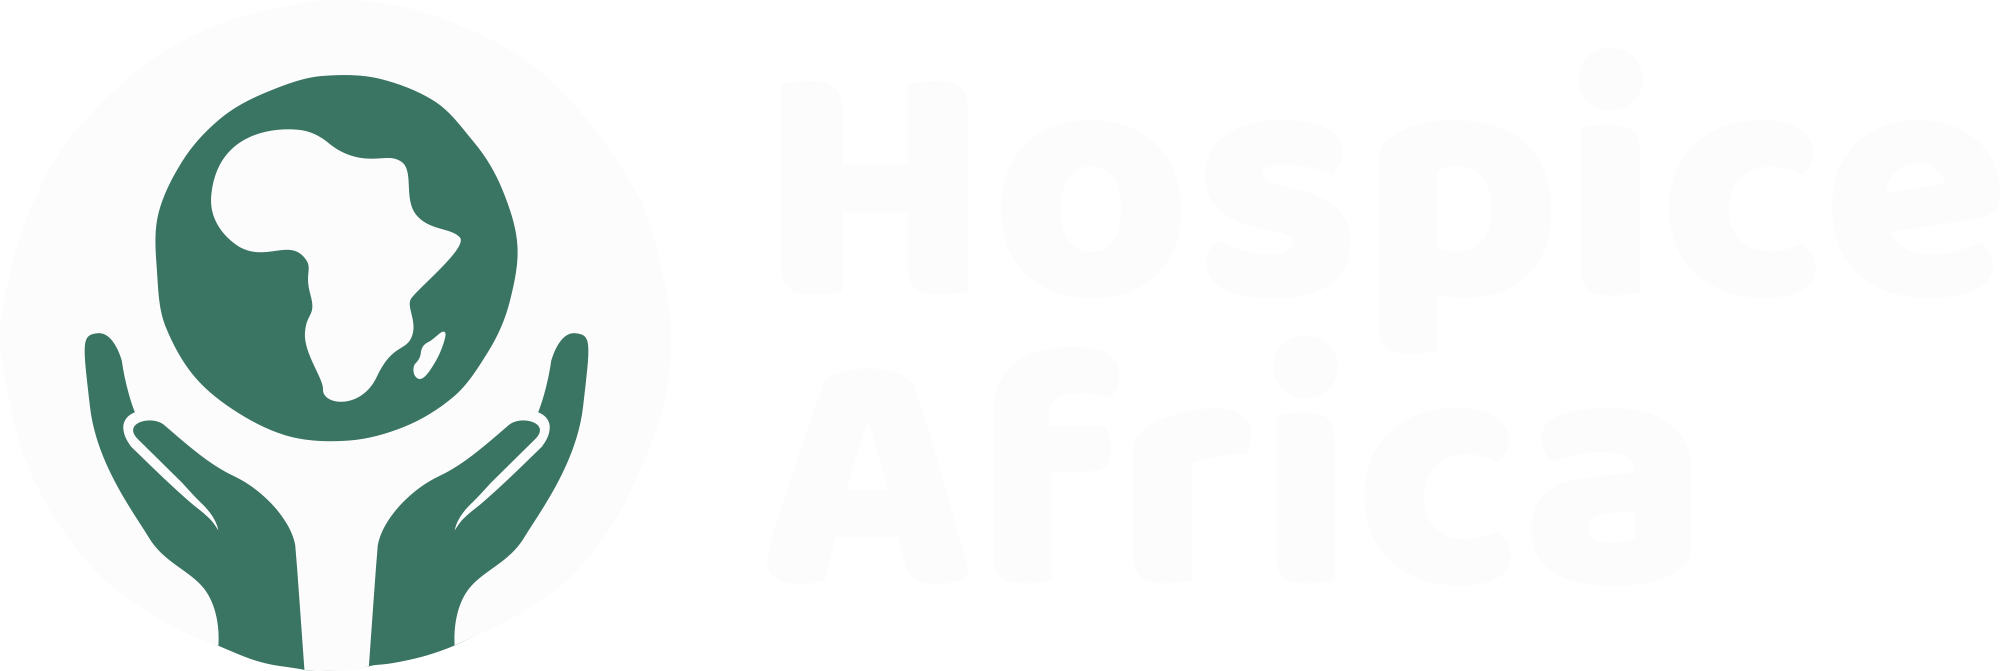 Hospice Africa